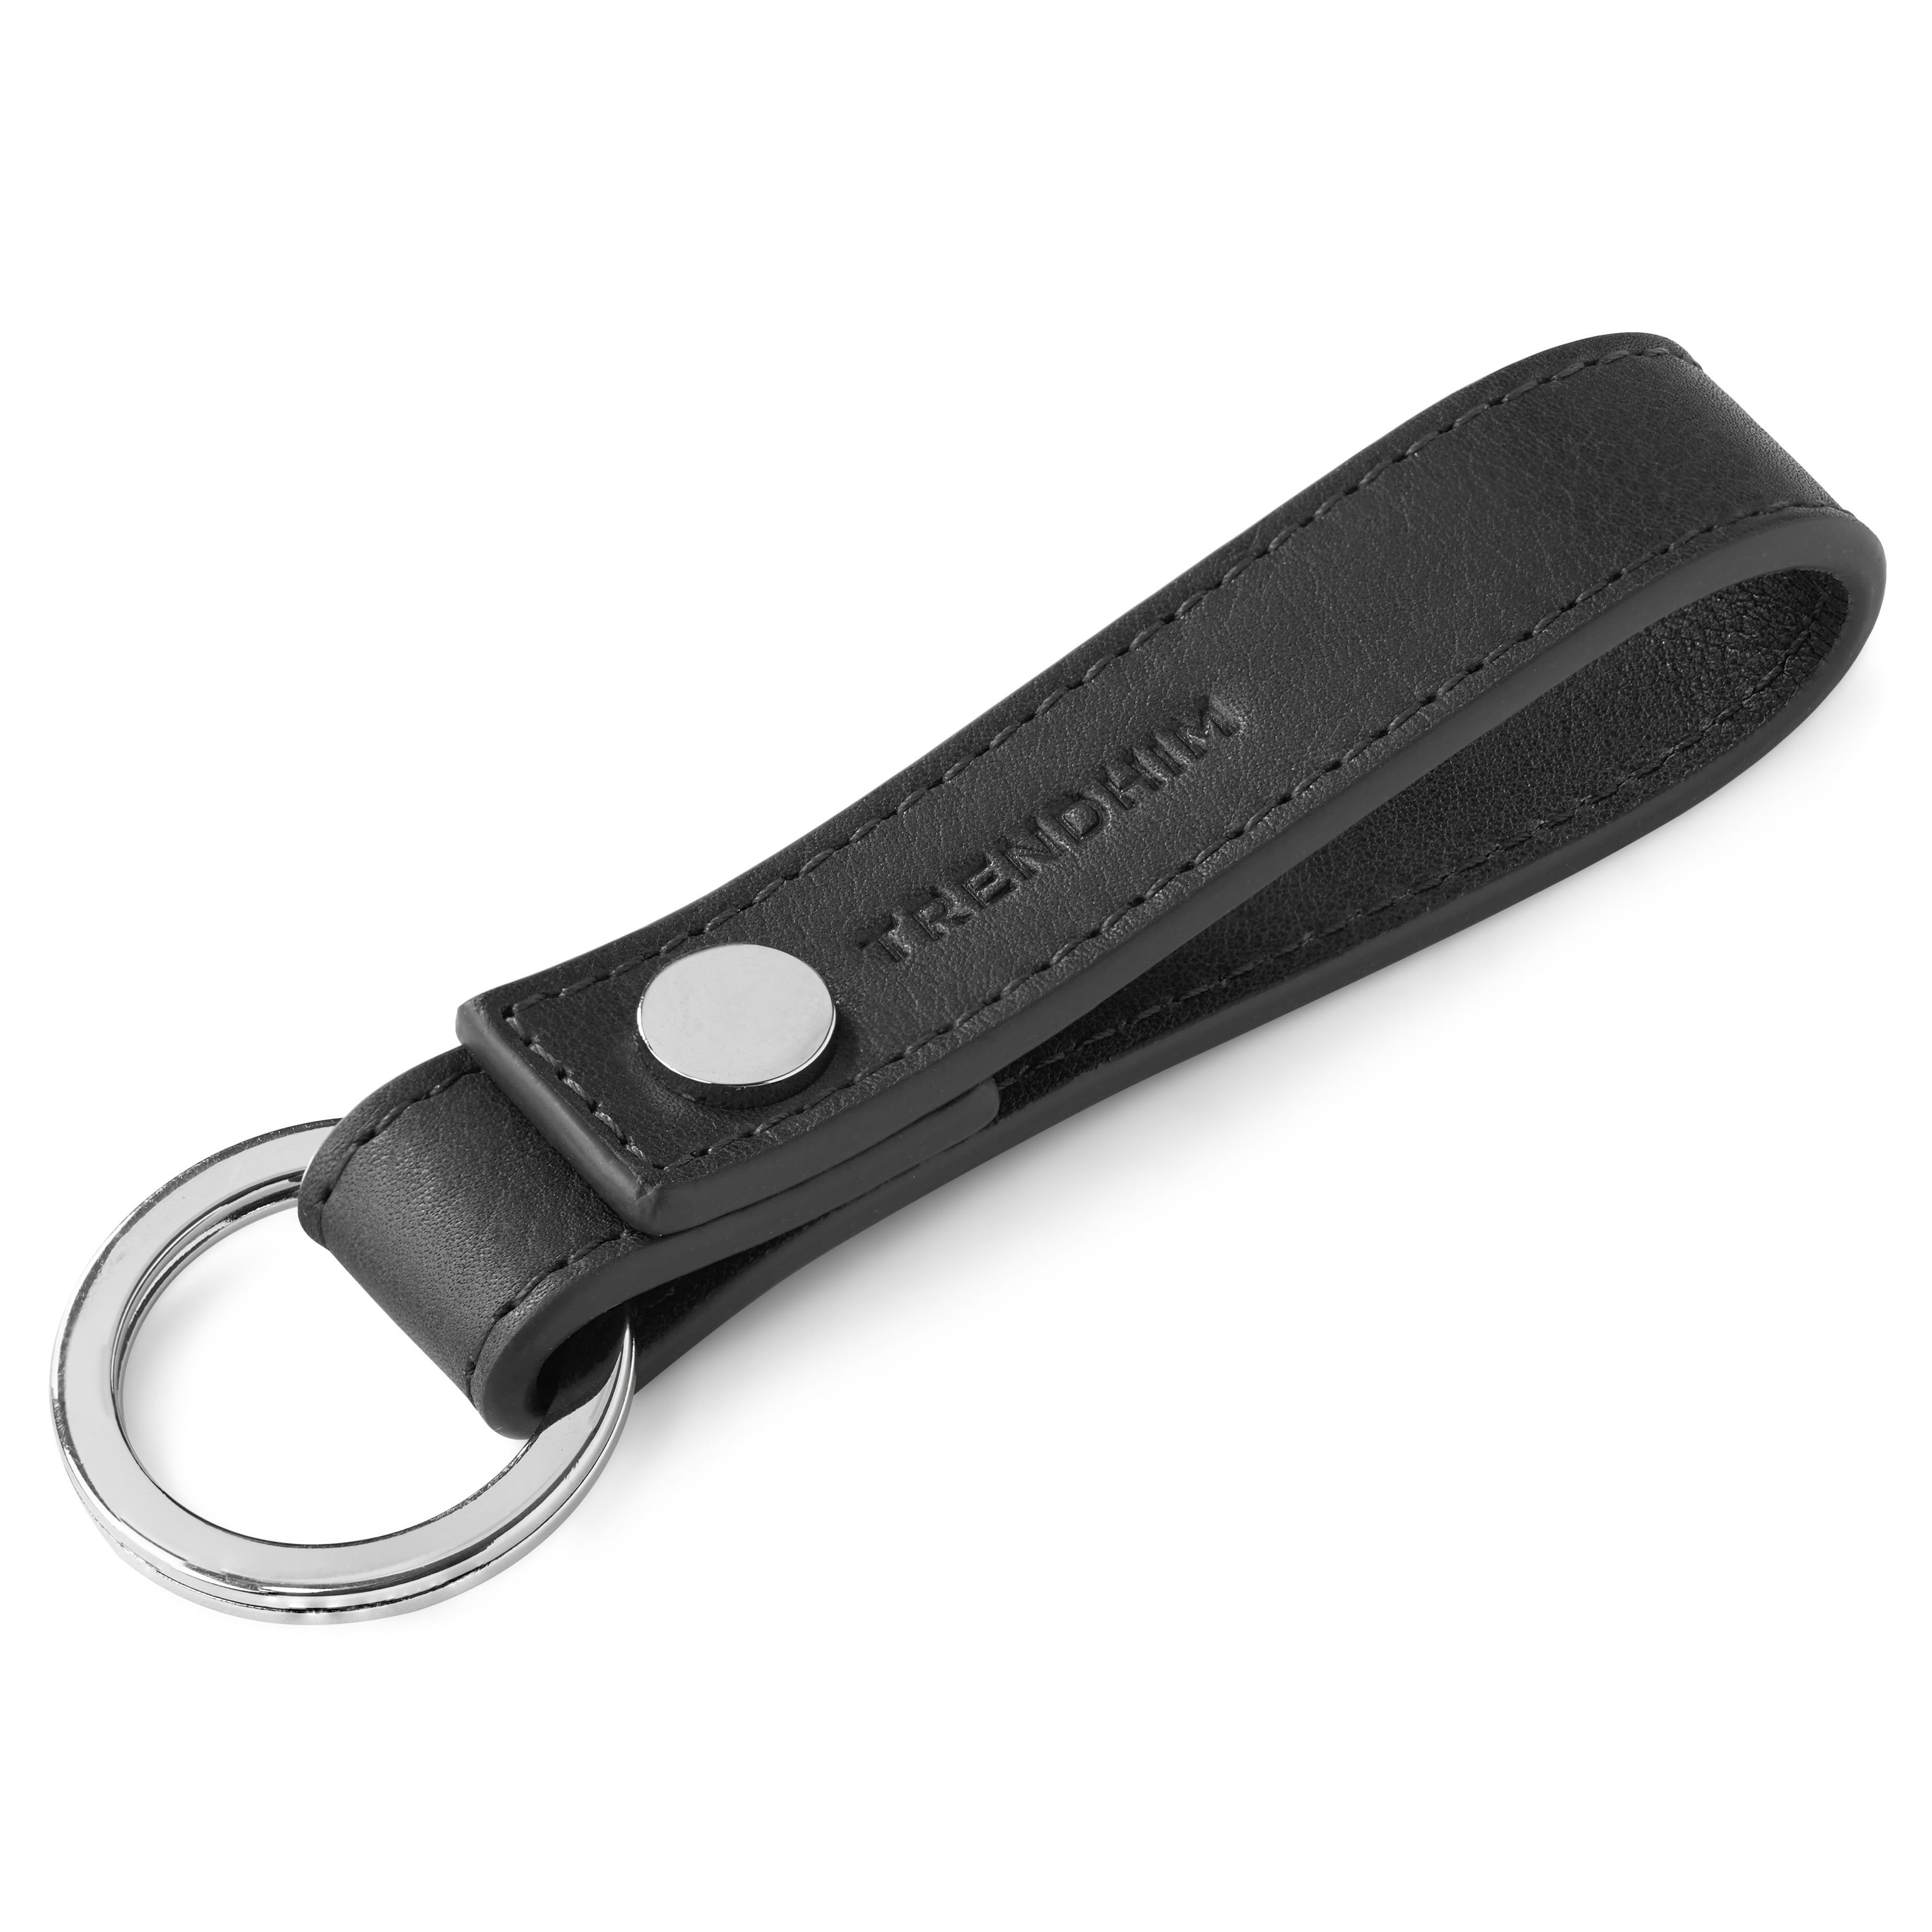 Custom Engraved Bar Square Keychains Simple Flat Stainles Steel Keyrings  Anniversary Unisex Gifts Blank Keyring